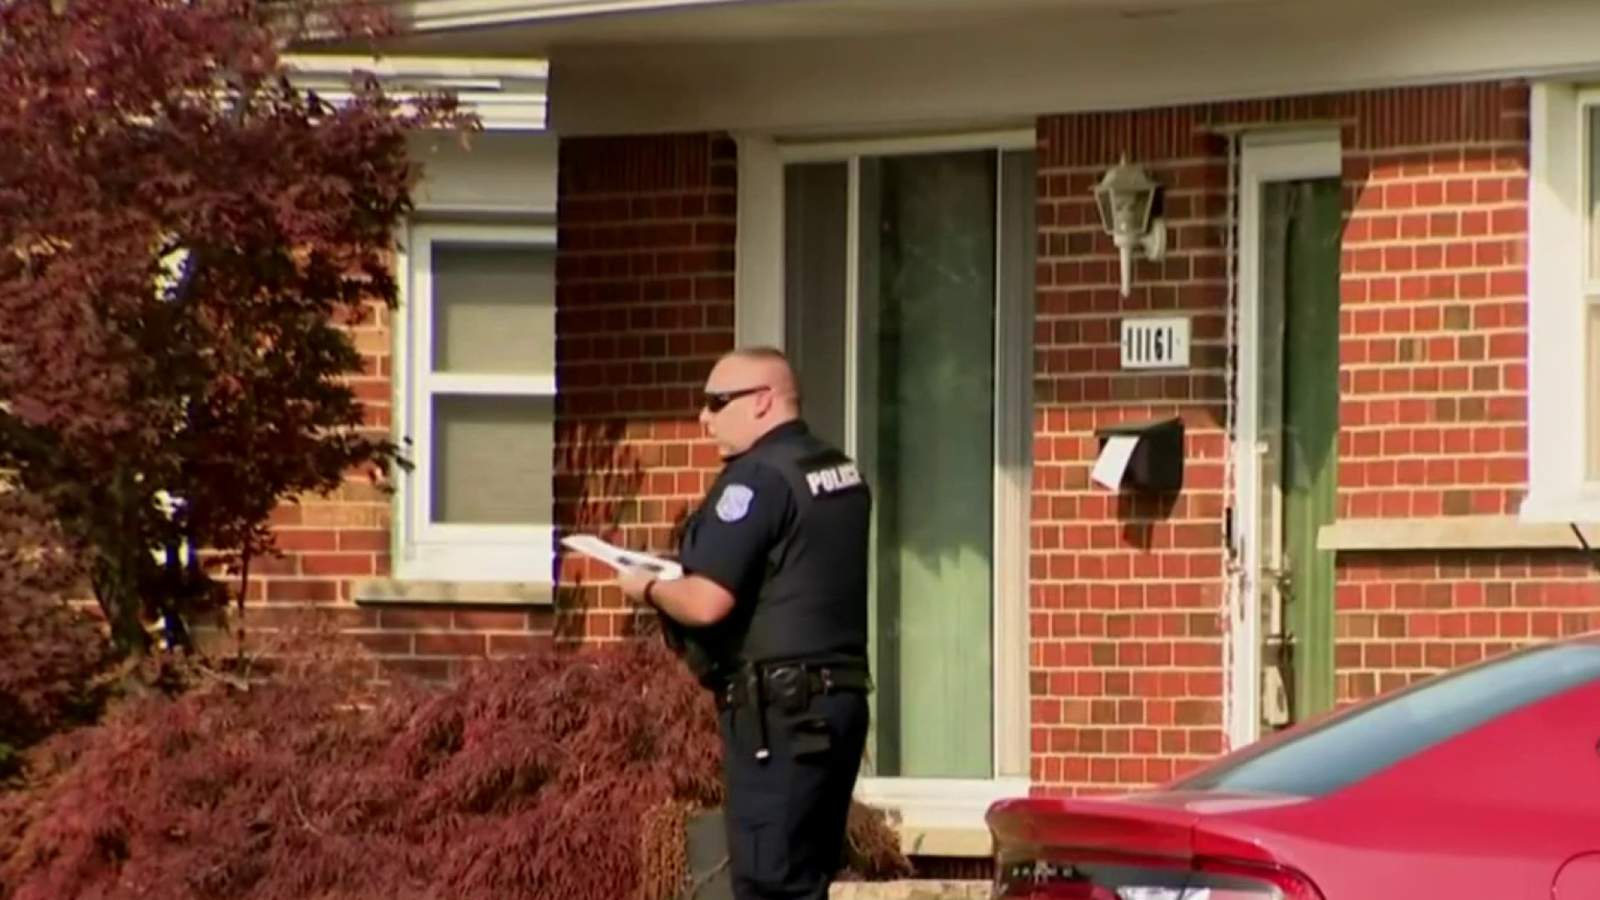 Police canvass Warren neighborhood in hate crime investigation